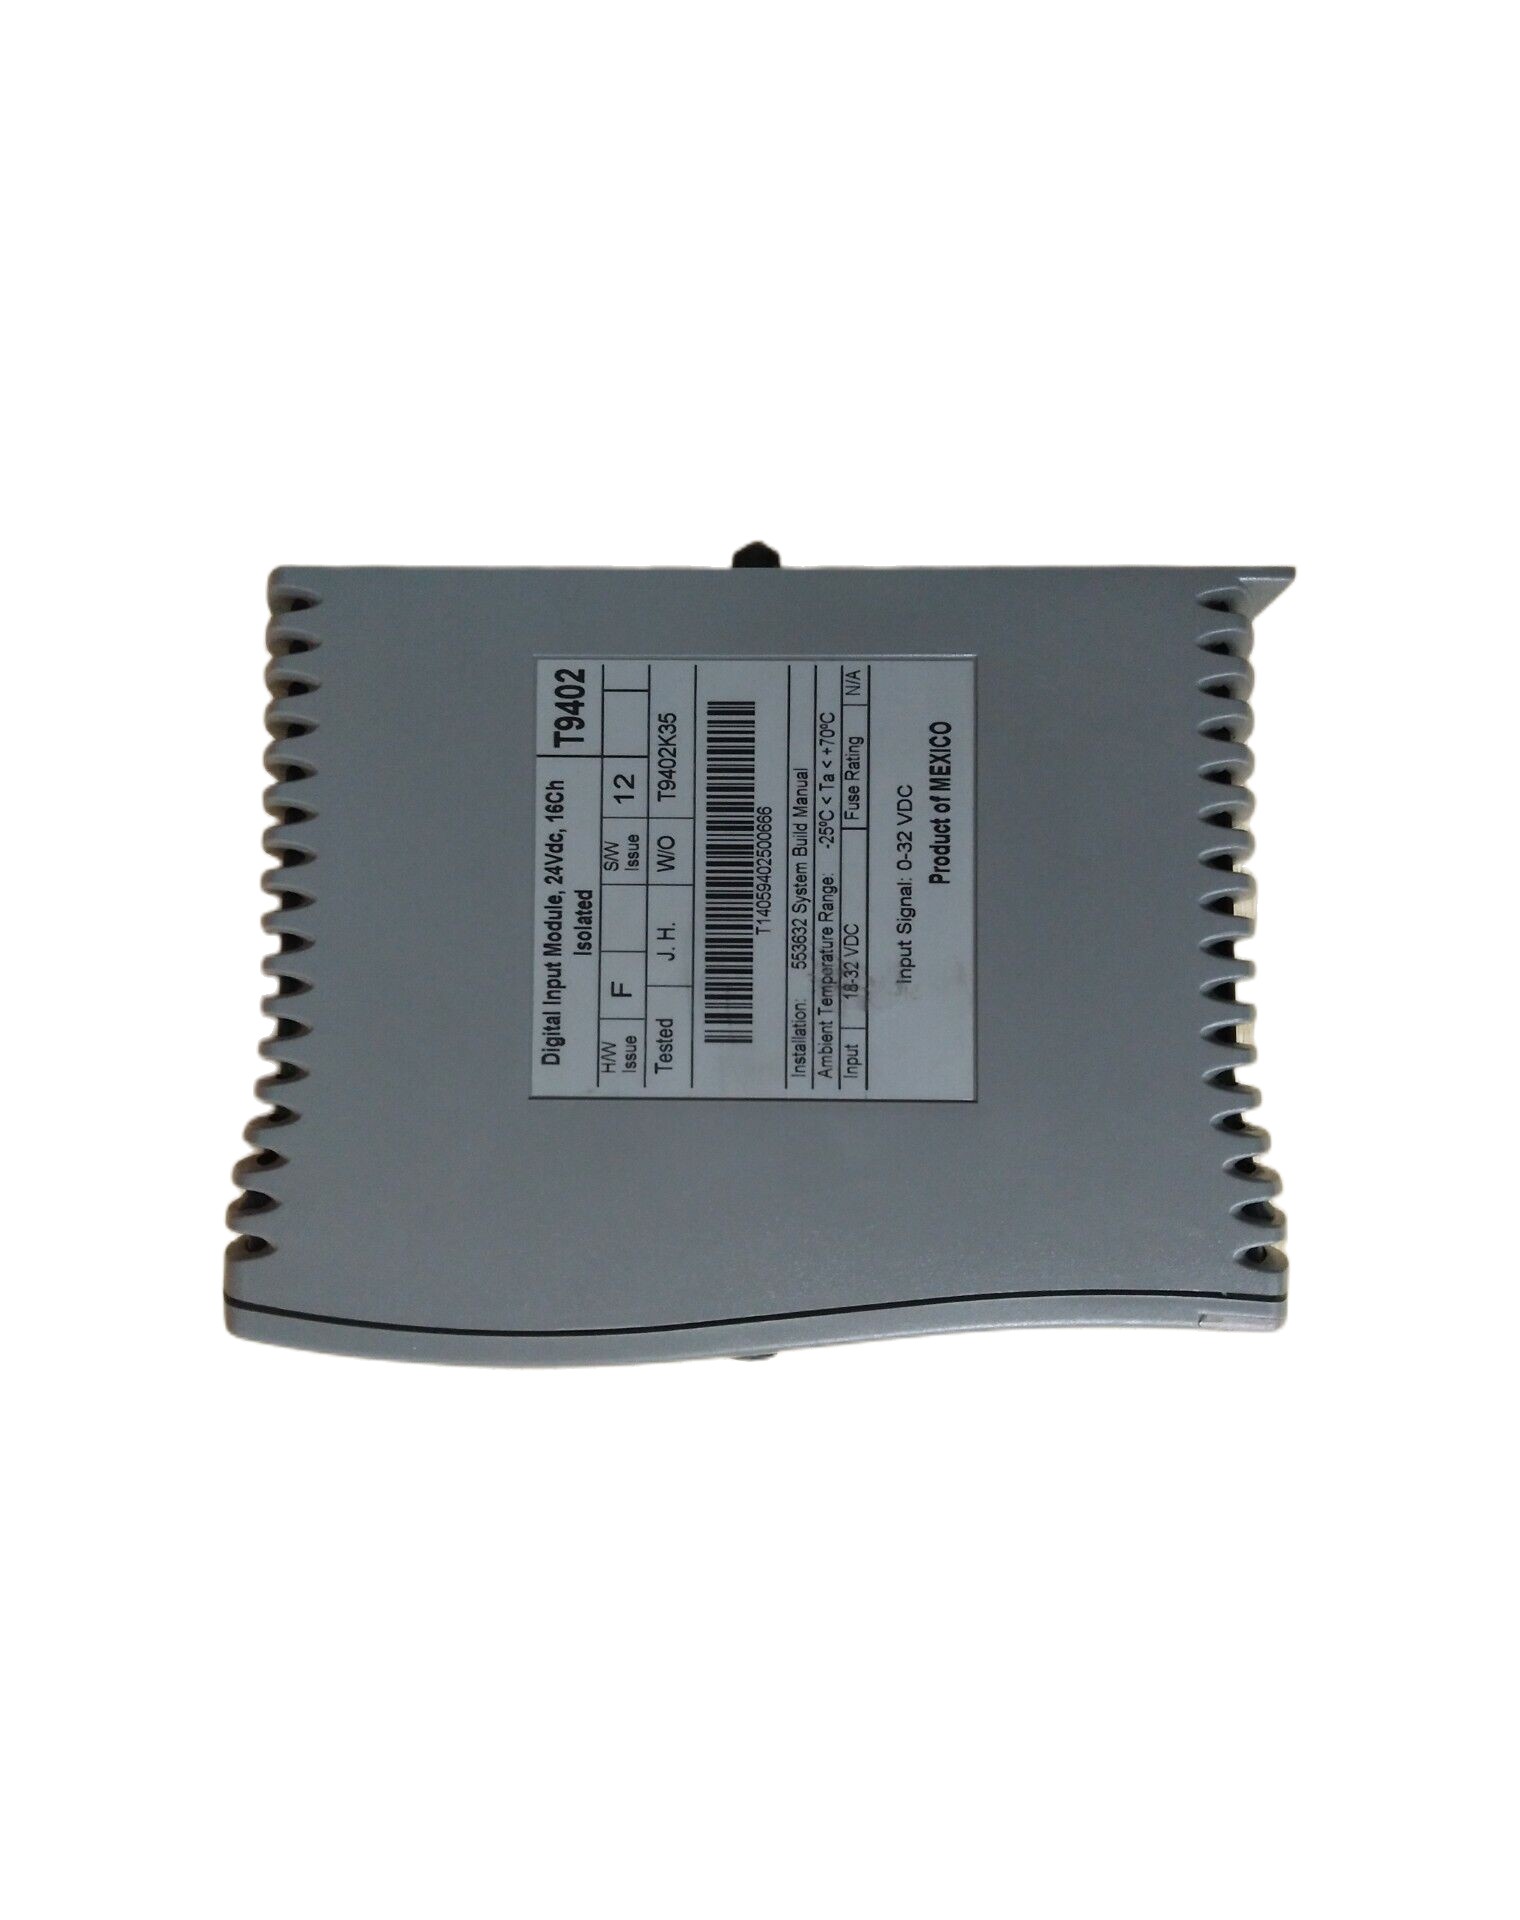 ICS TRIPLEX 9402 Integrated circuit card